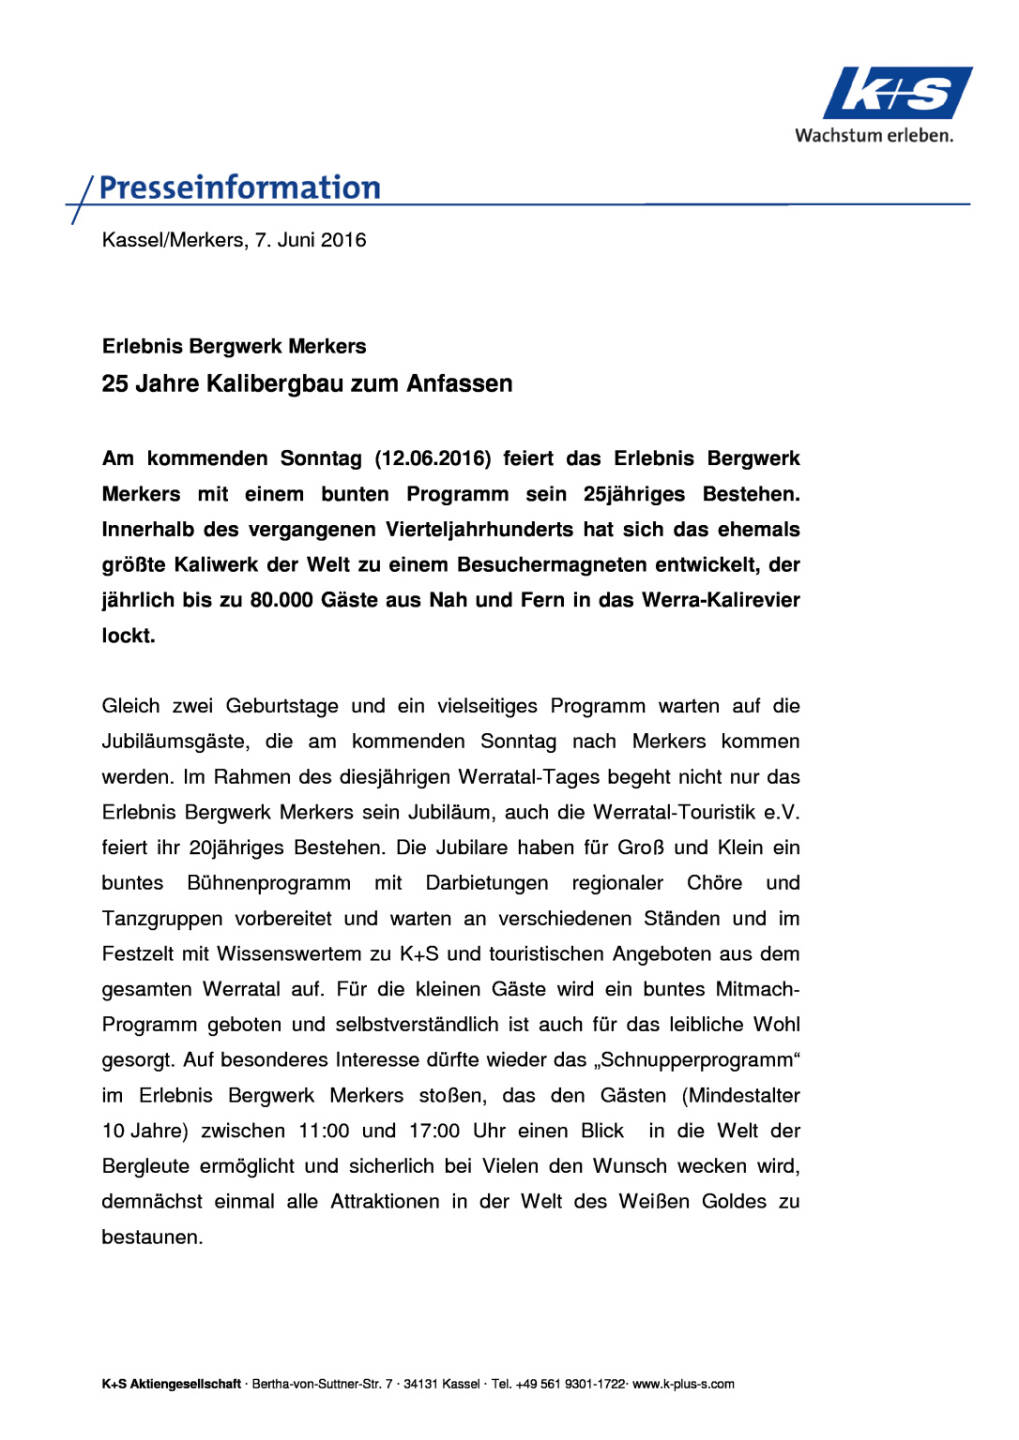 K+S AG: 25 Jahre Kalibergbau zum Anfassen, Seite 1/4, komplettes Dokument unter http://boerse-social.com/static/uploads/file_1179_ks_ag_25_jahre_kalibergbau_zum_anfassen.pdf